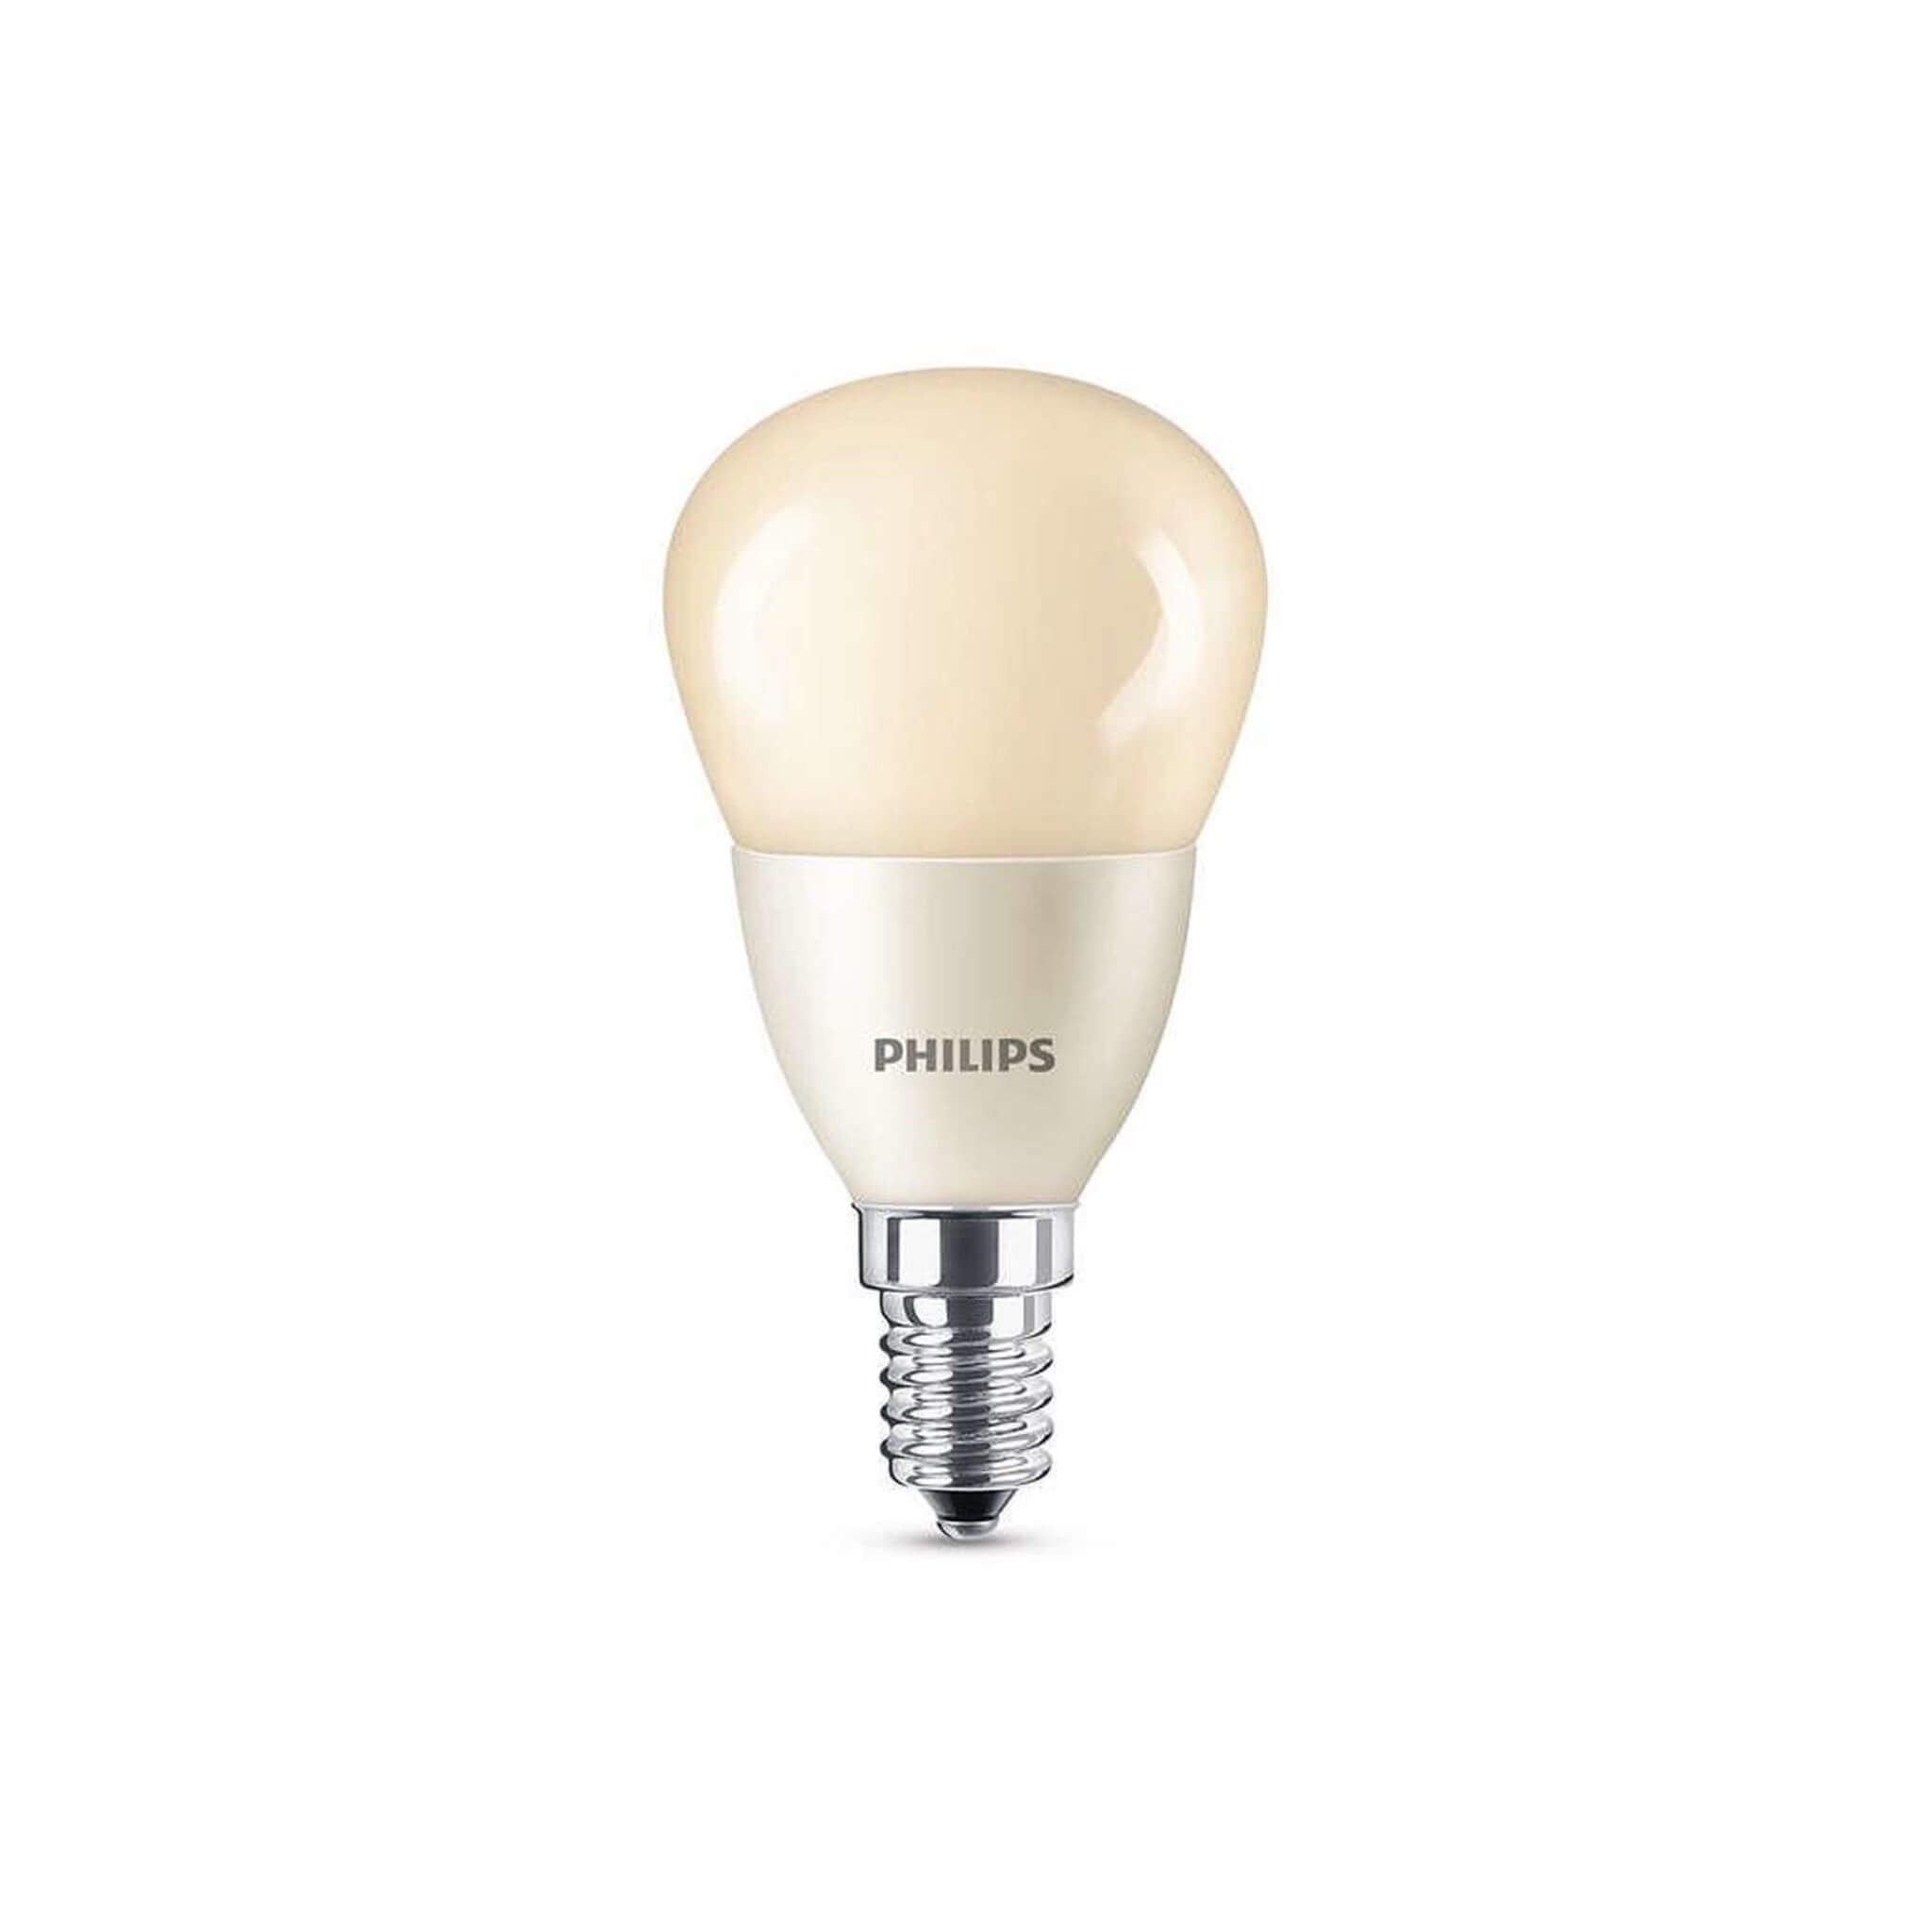 Snel Overeenkomstig Vergelijking Philips LED Lamp Flame - E14 fitting - Dimbaar warm wit licht - 4W (15 –  LED.nl